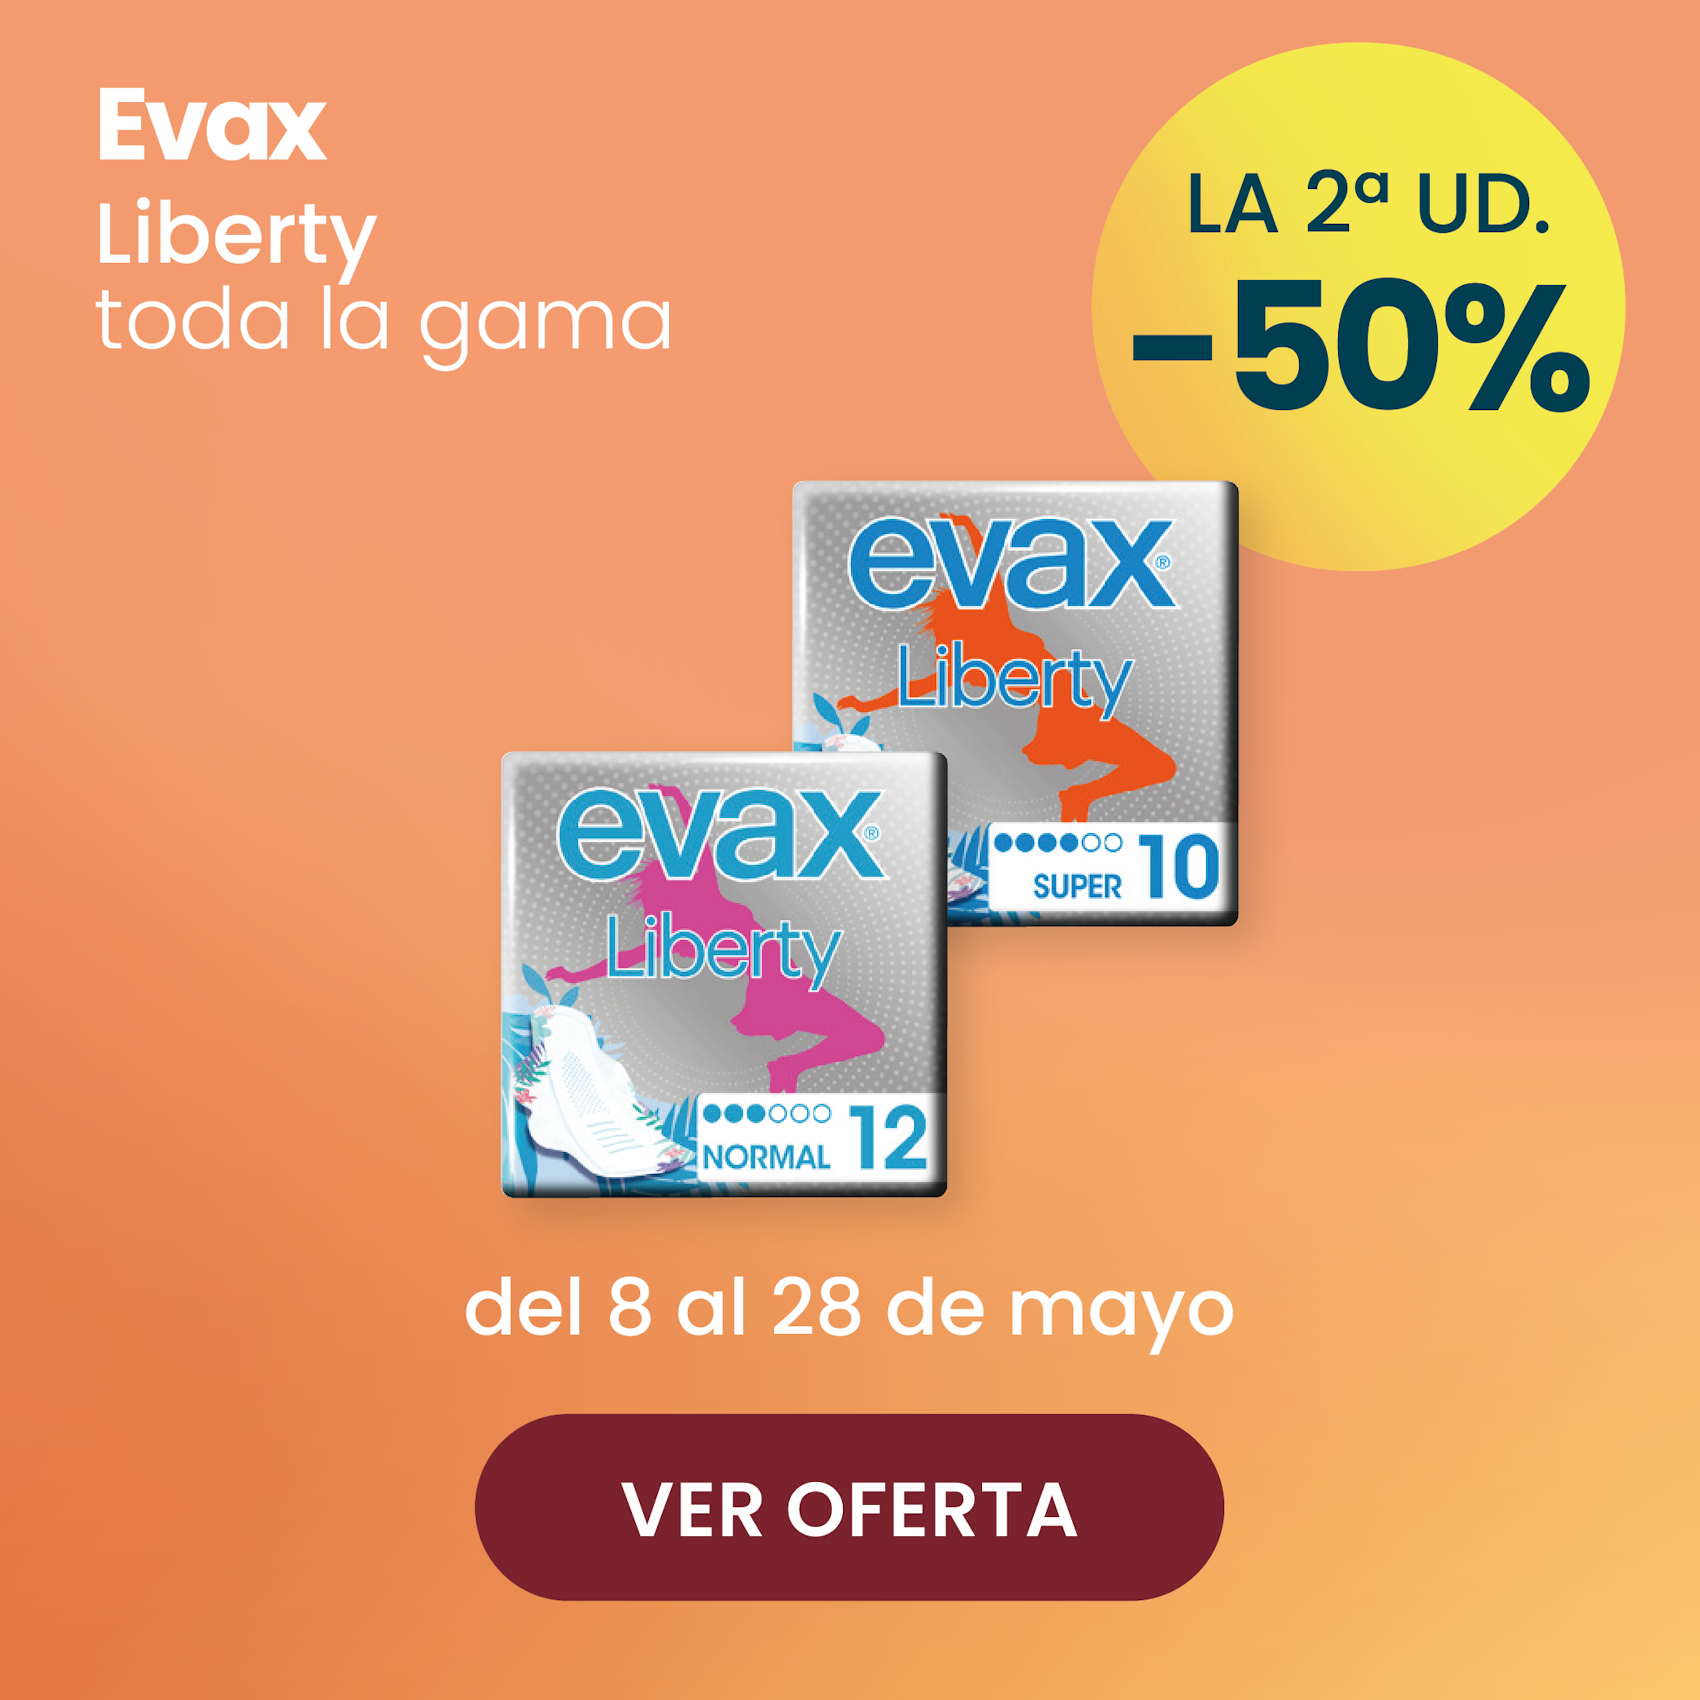 EVAX LIBERTY TODA LA GAMA -50% la 2ª ud.